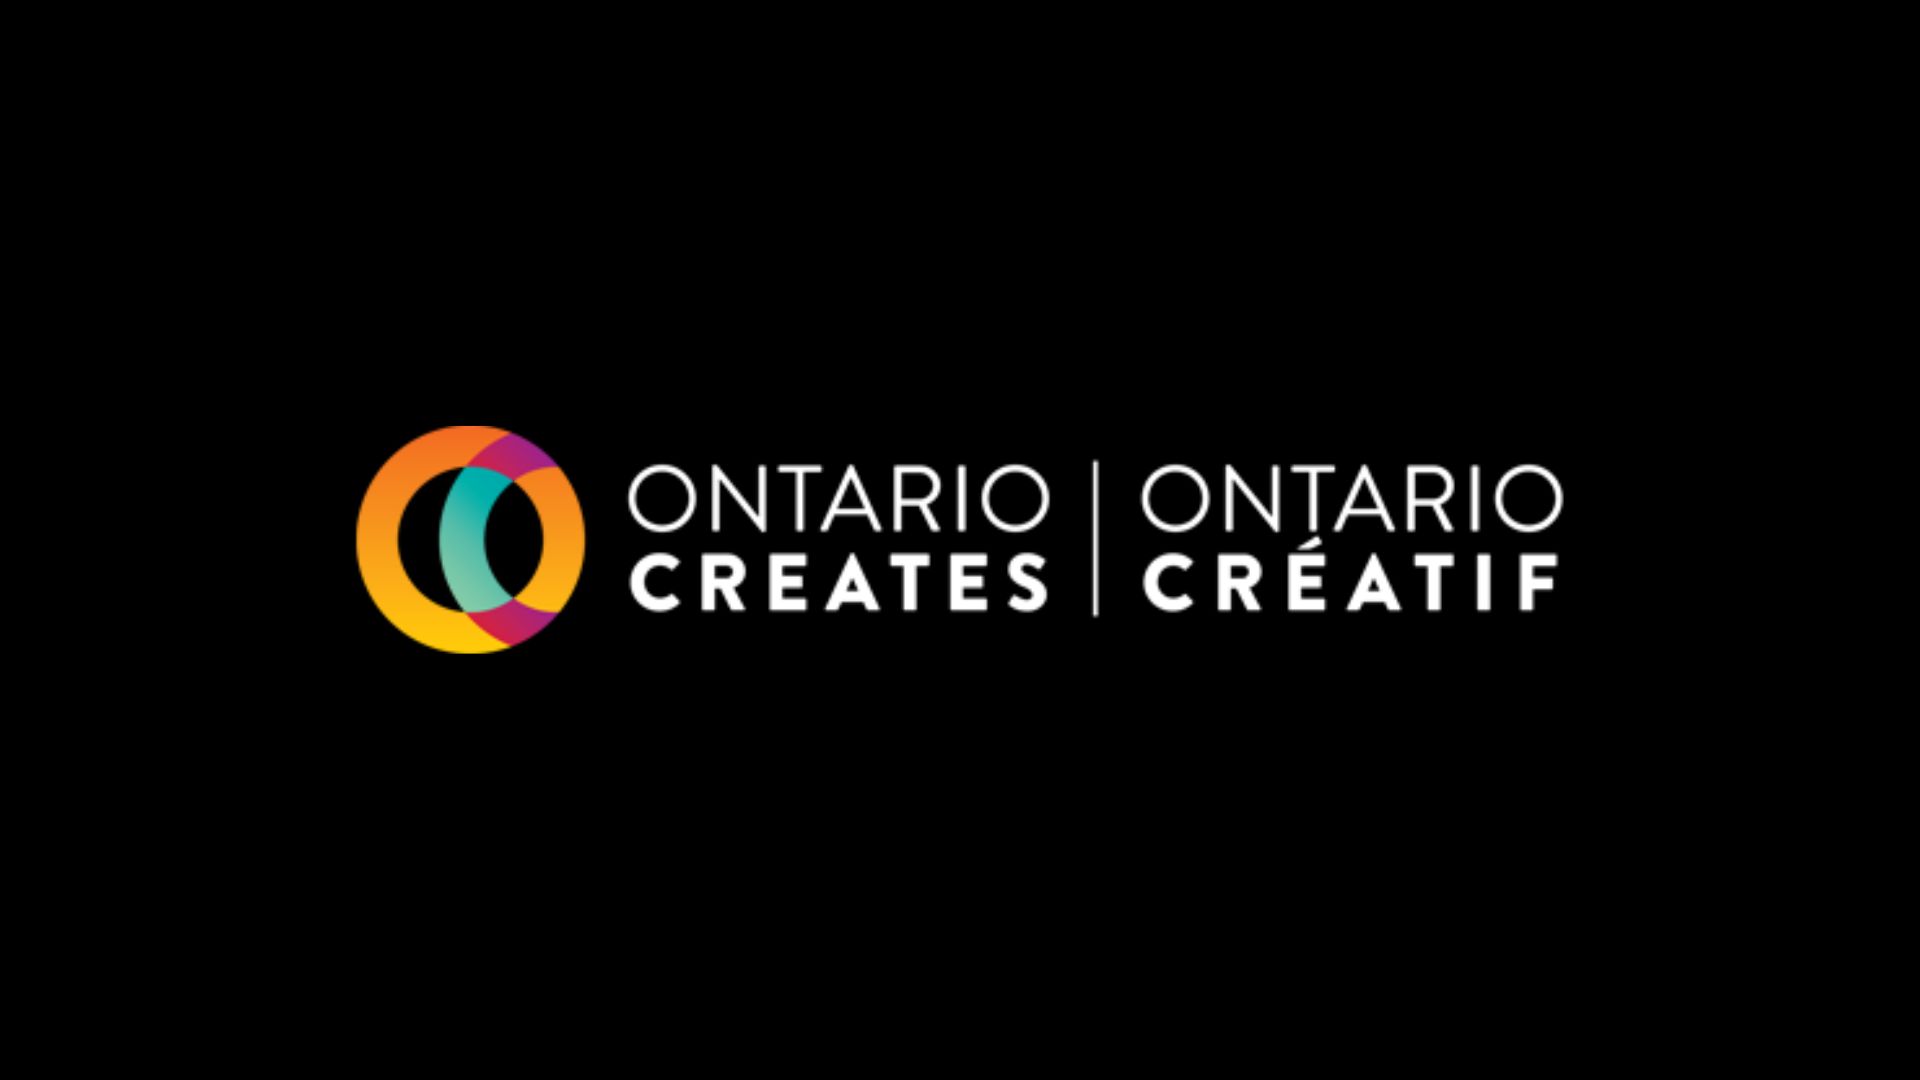 Ontario Creates